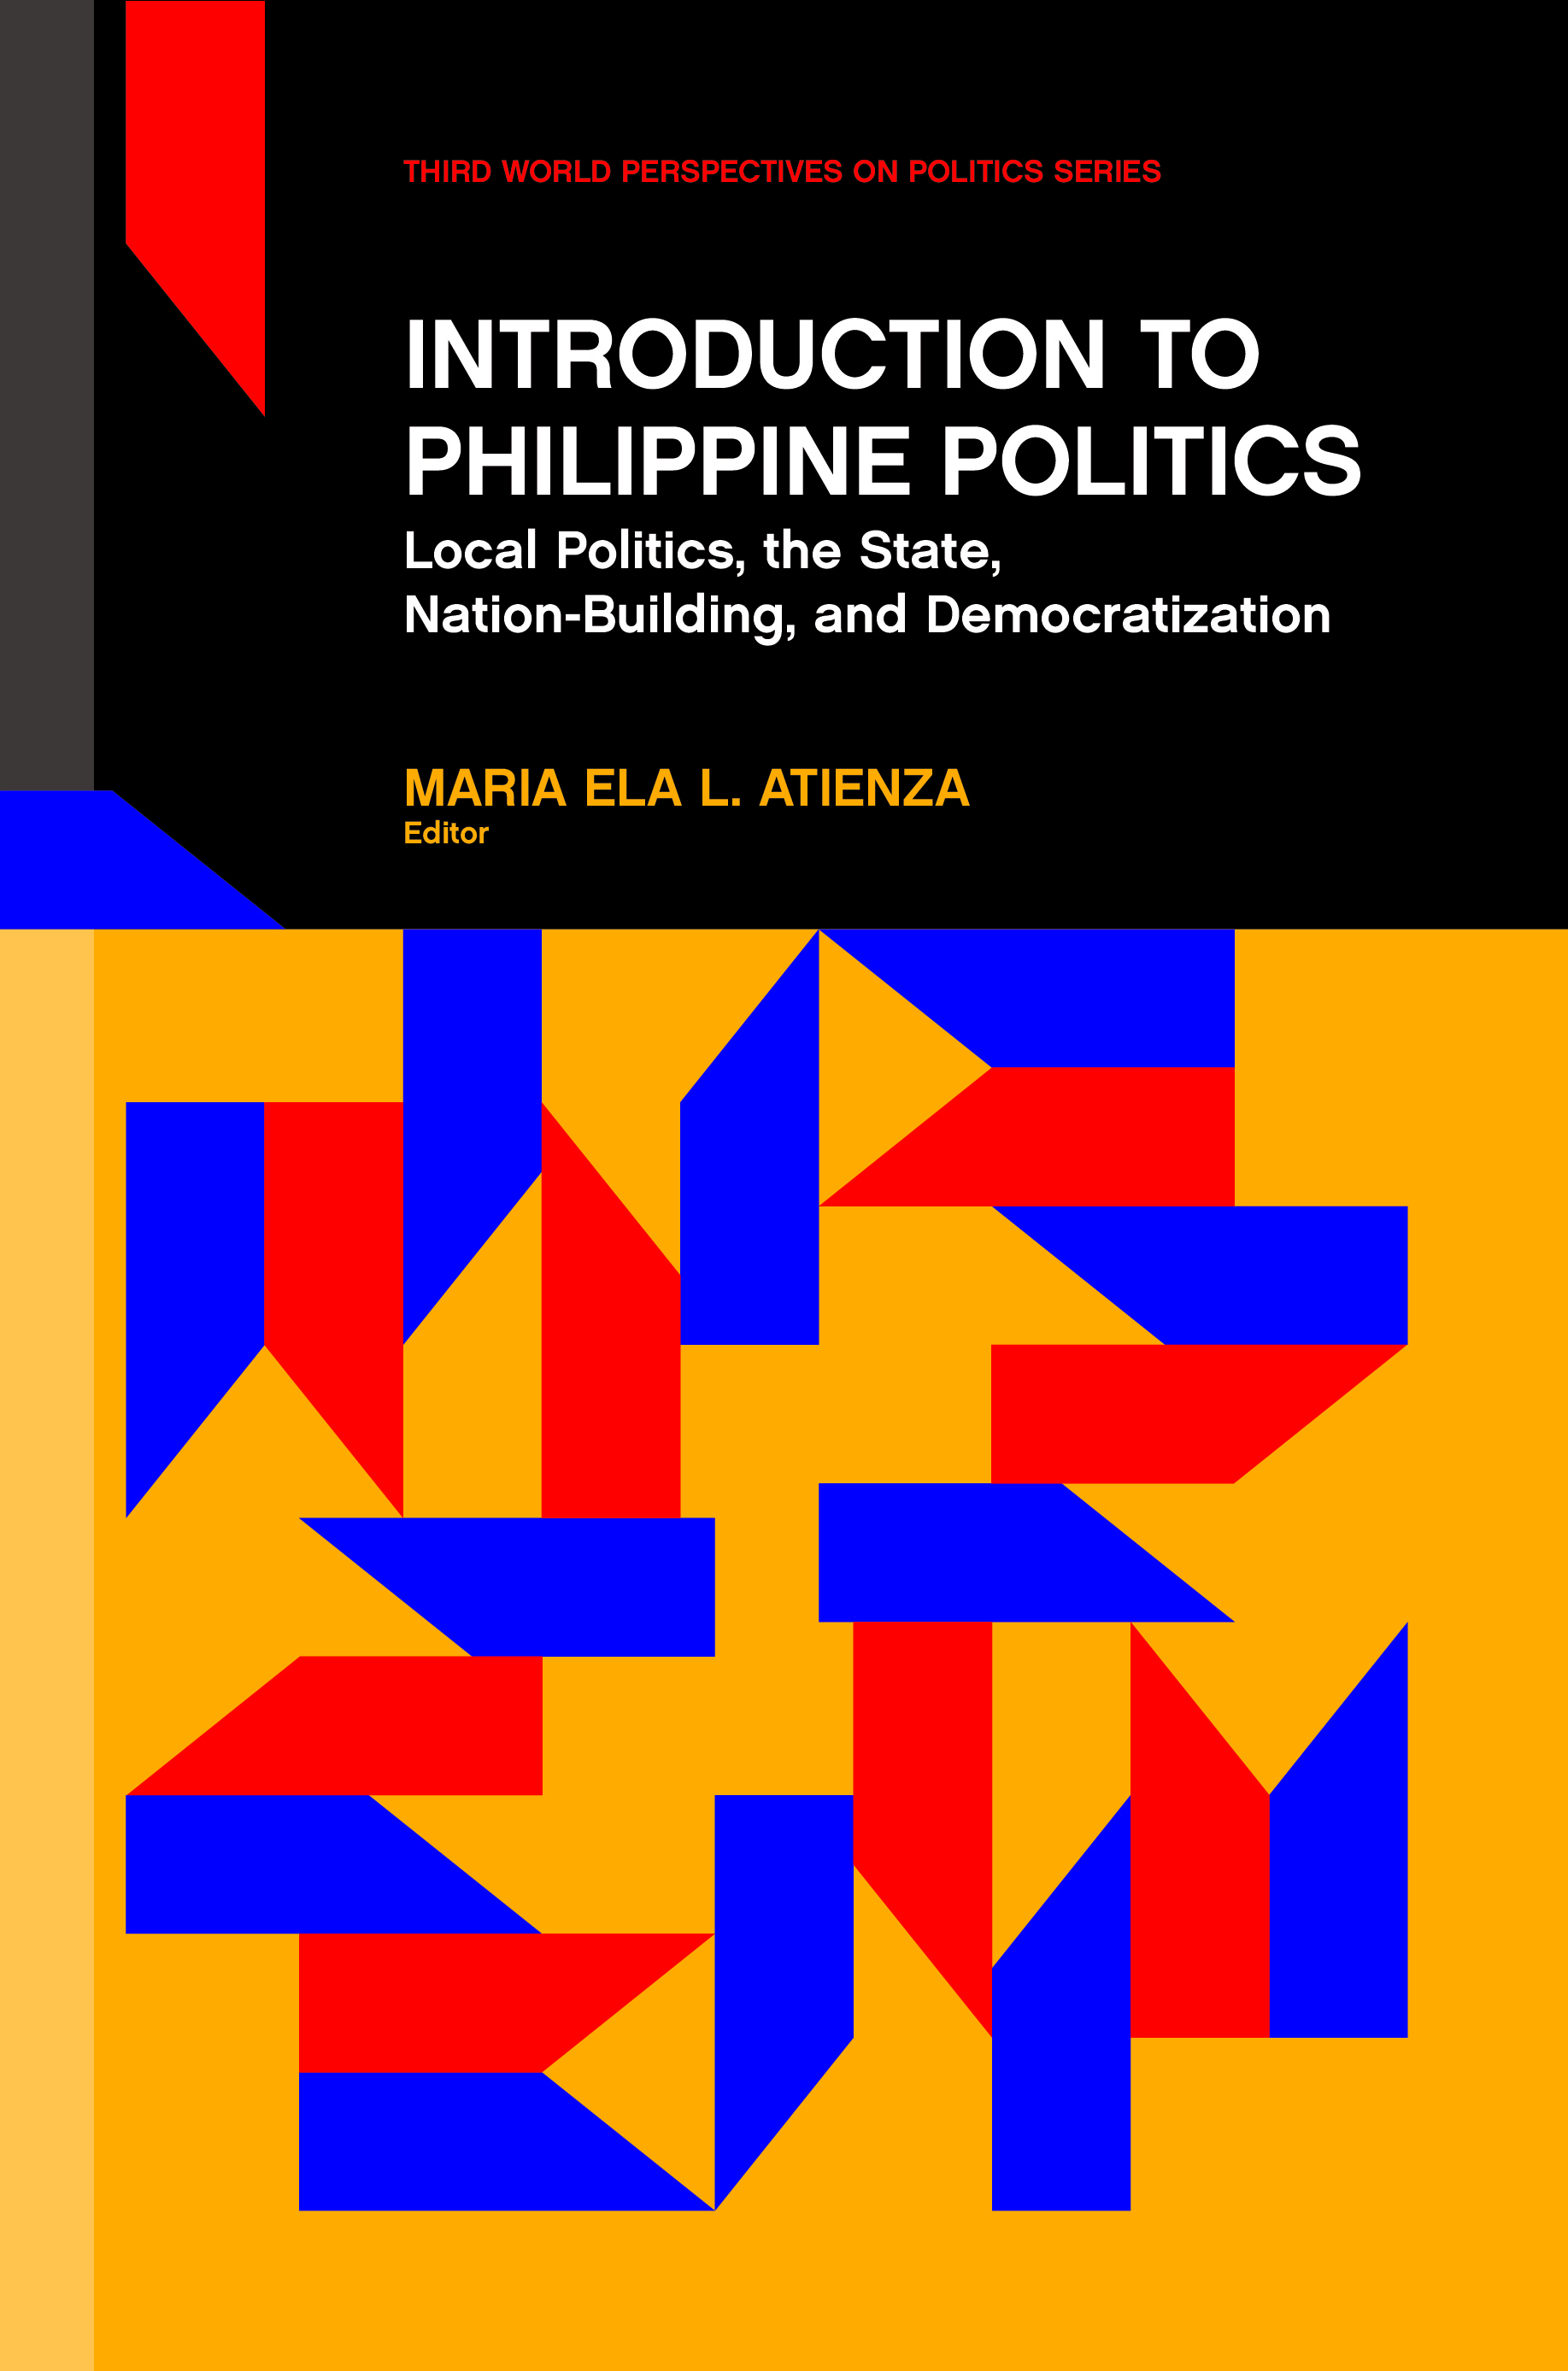 philippine politics today essay